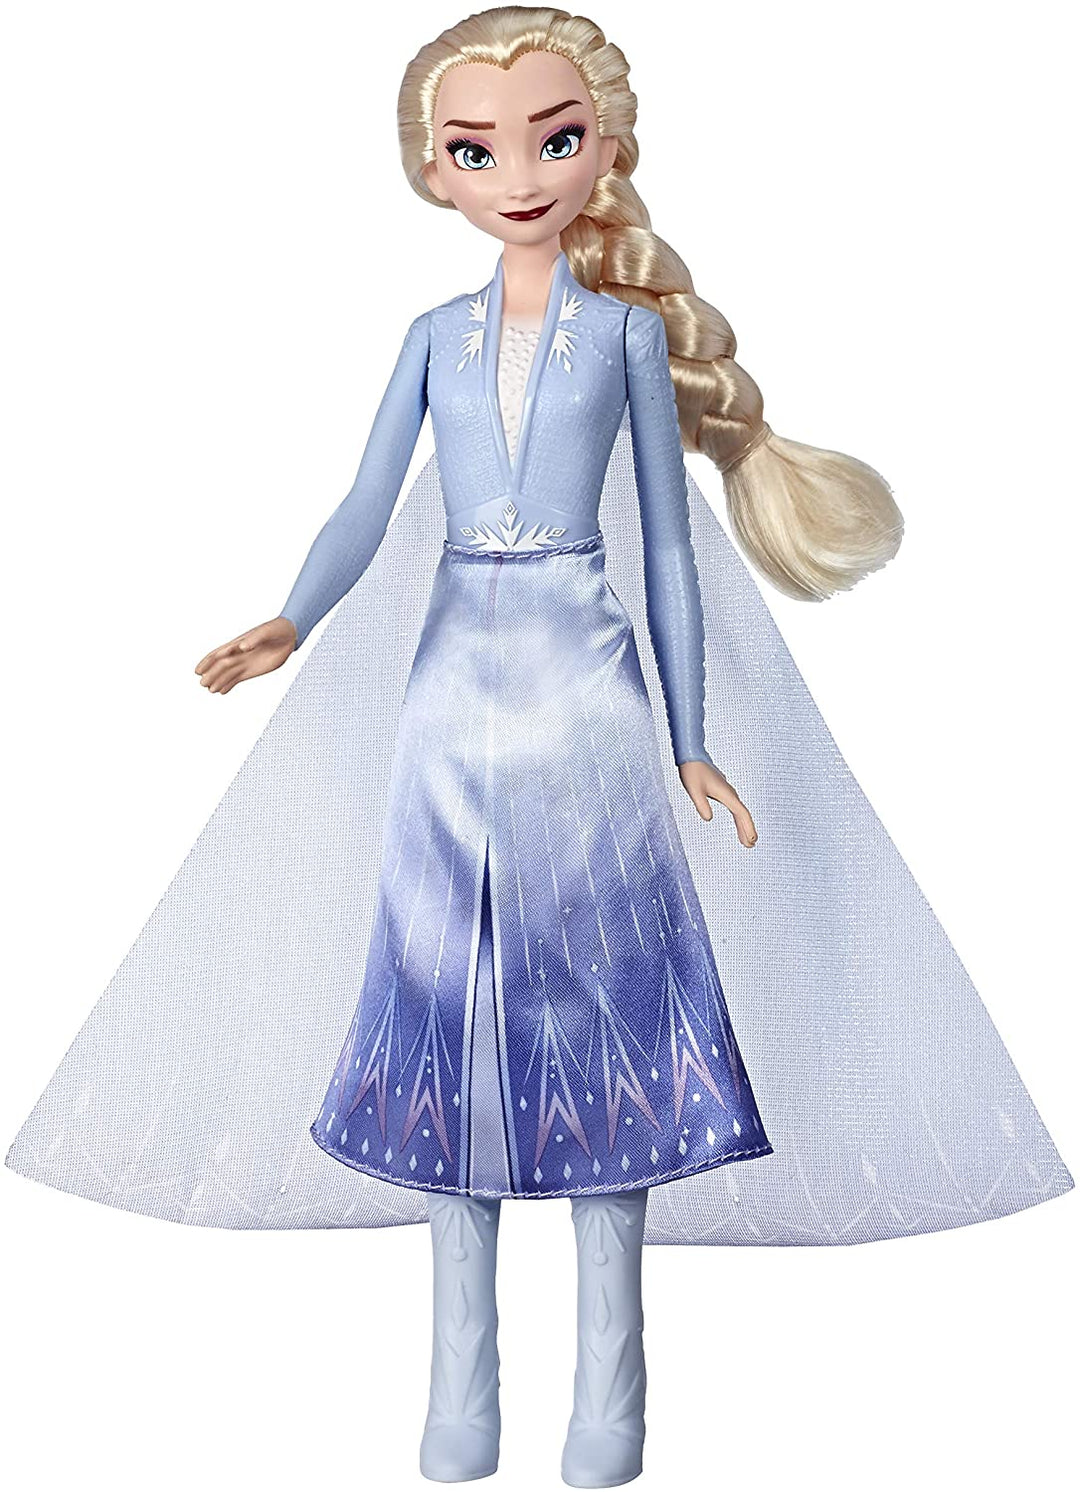 Disney Frozen Elsa Magical Swirling Adventure Muñeca de moda que se ilumina, inspirada en la película Frozen 2 de Disney